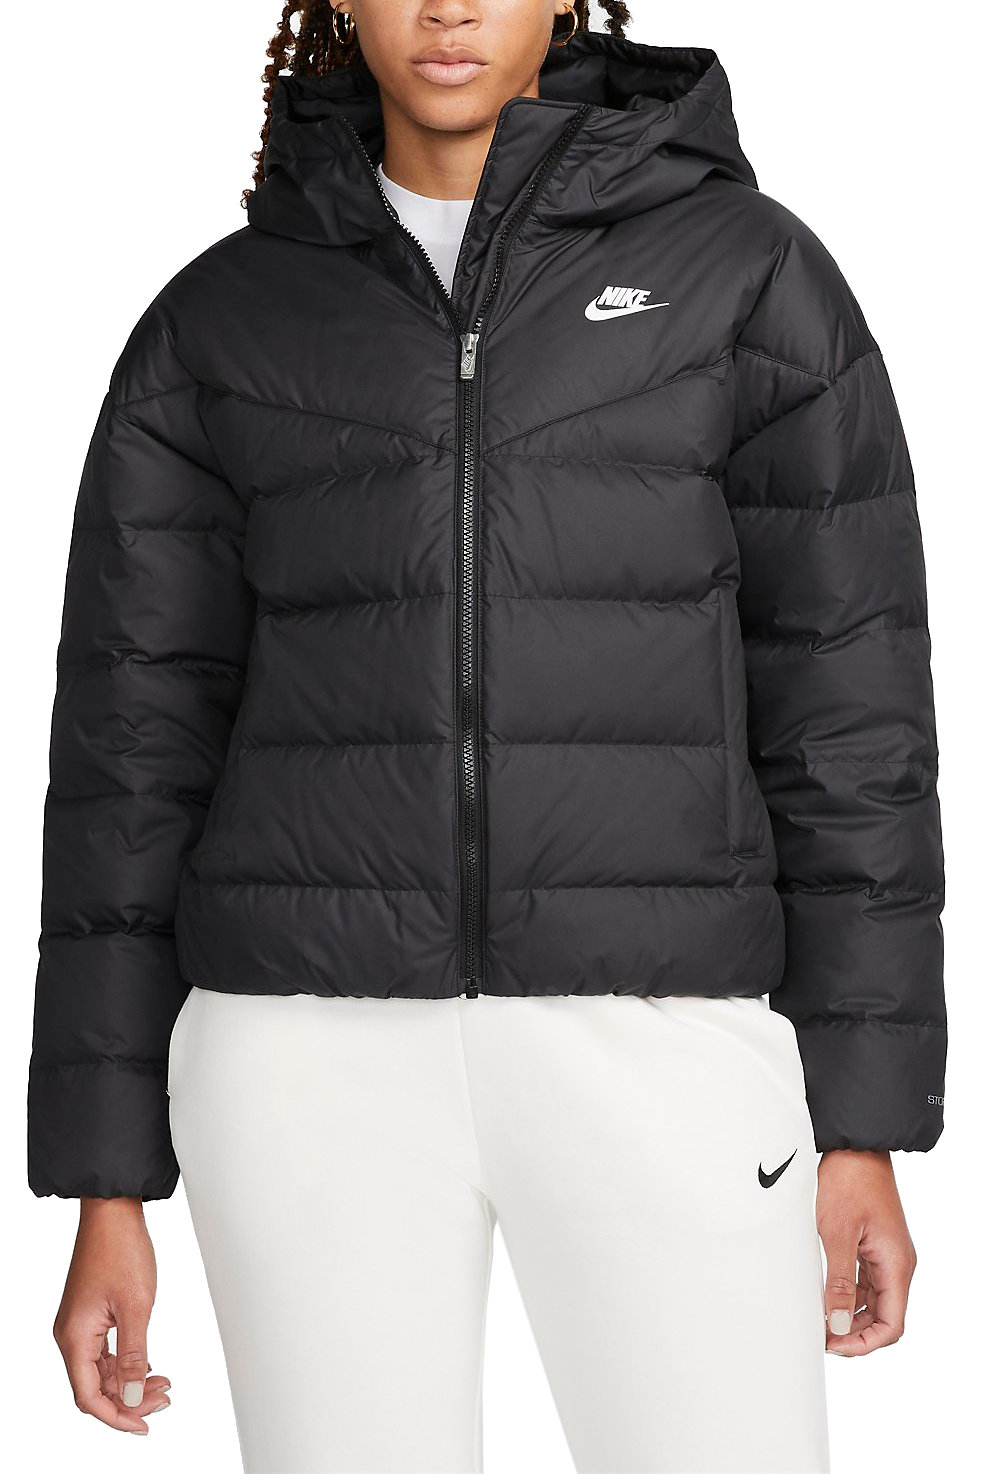 Casaco com capuz Nike Storm-FIT Winterjacket Womens